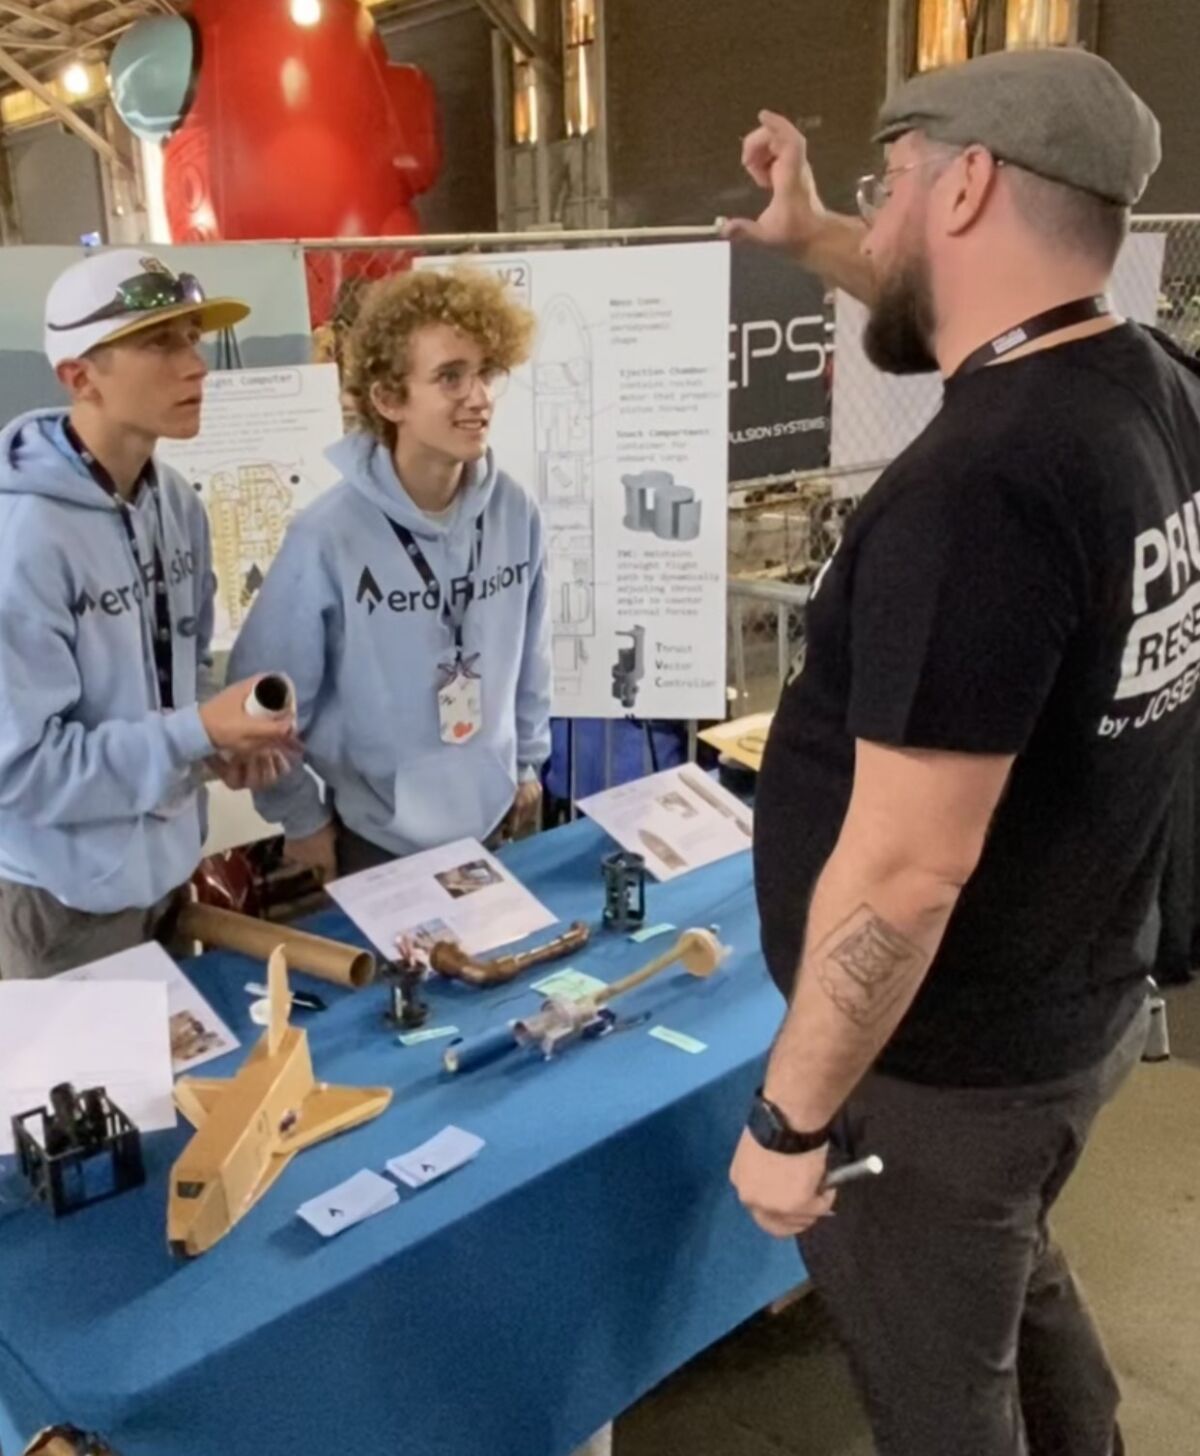 Rocket science: Carmel Valley teens showcase home-built rocket at San Francisco expo